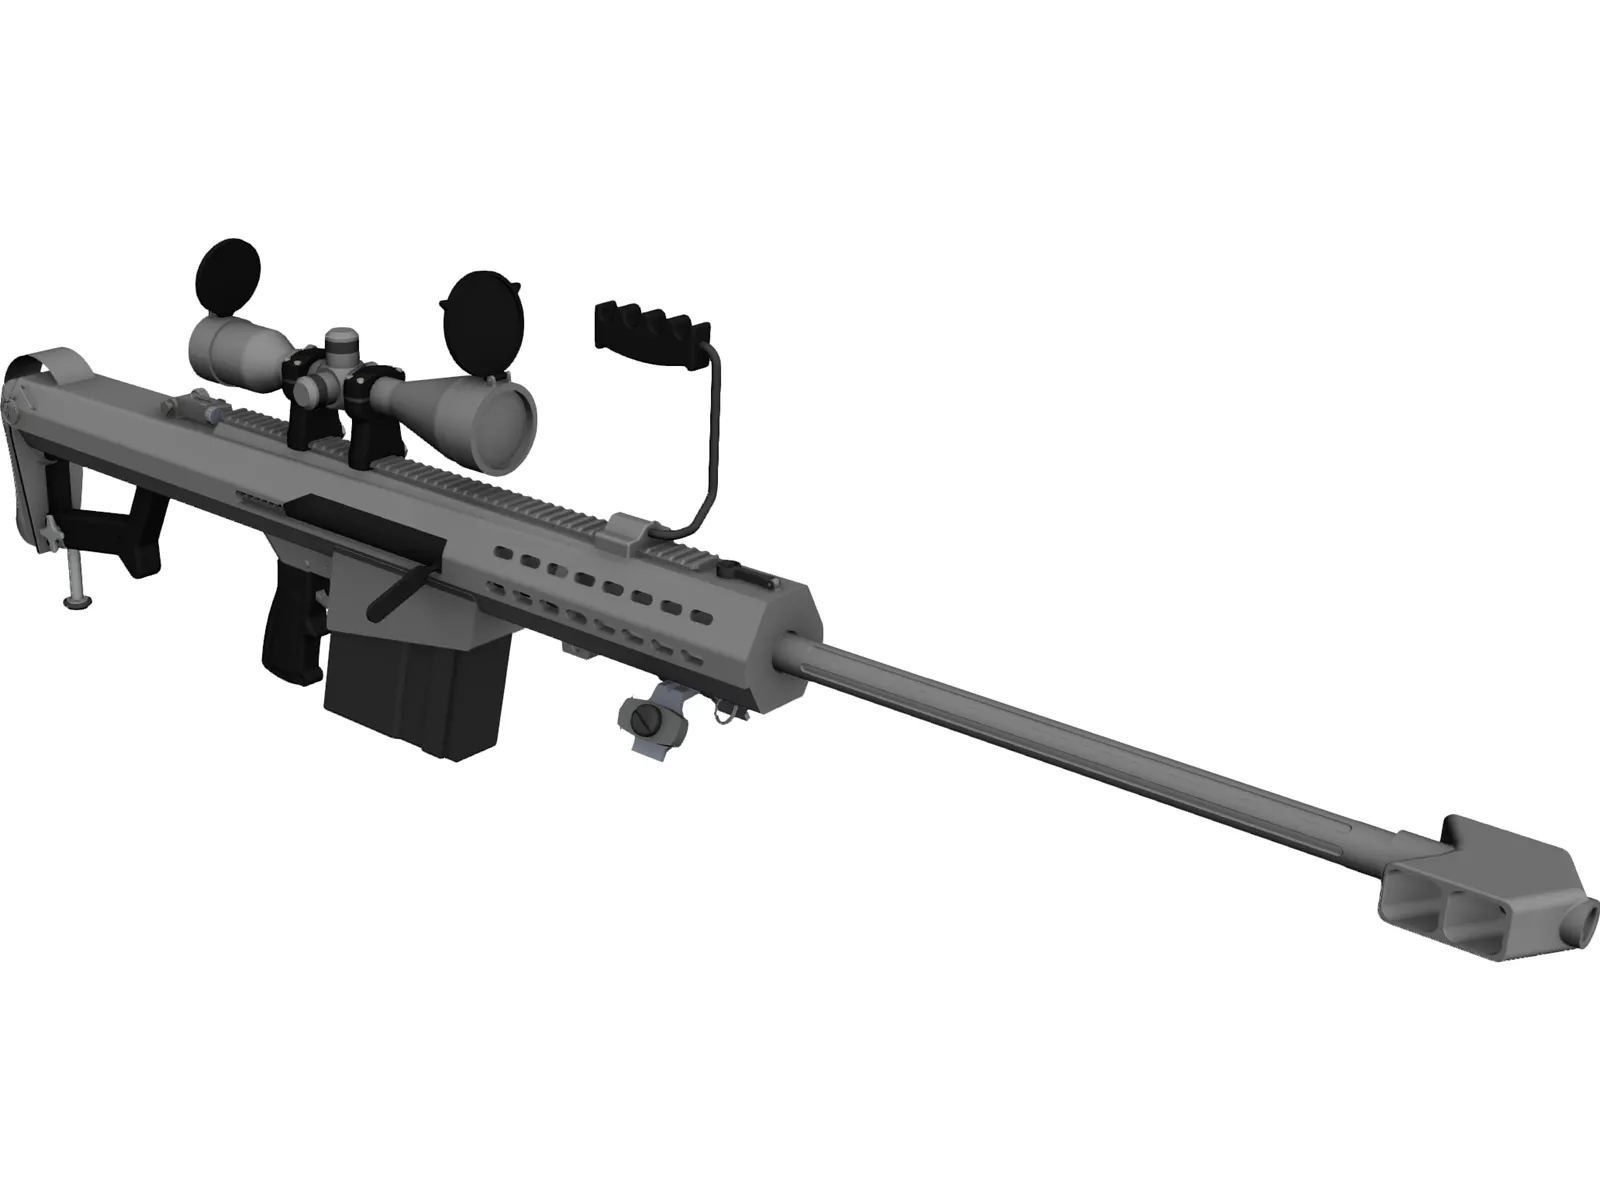 M107 Barrett 3D Model